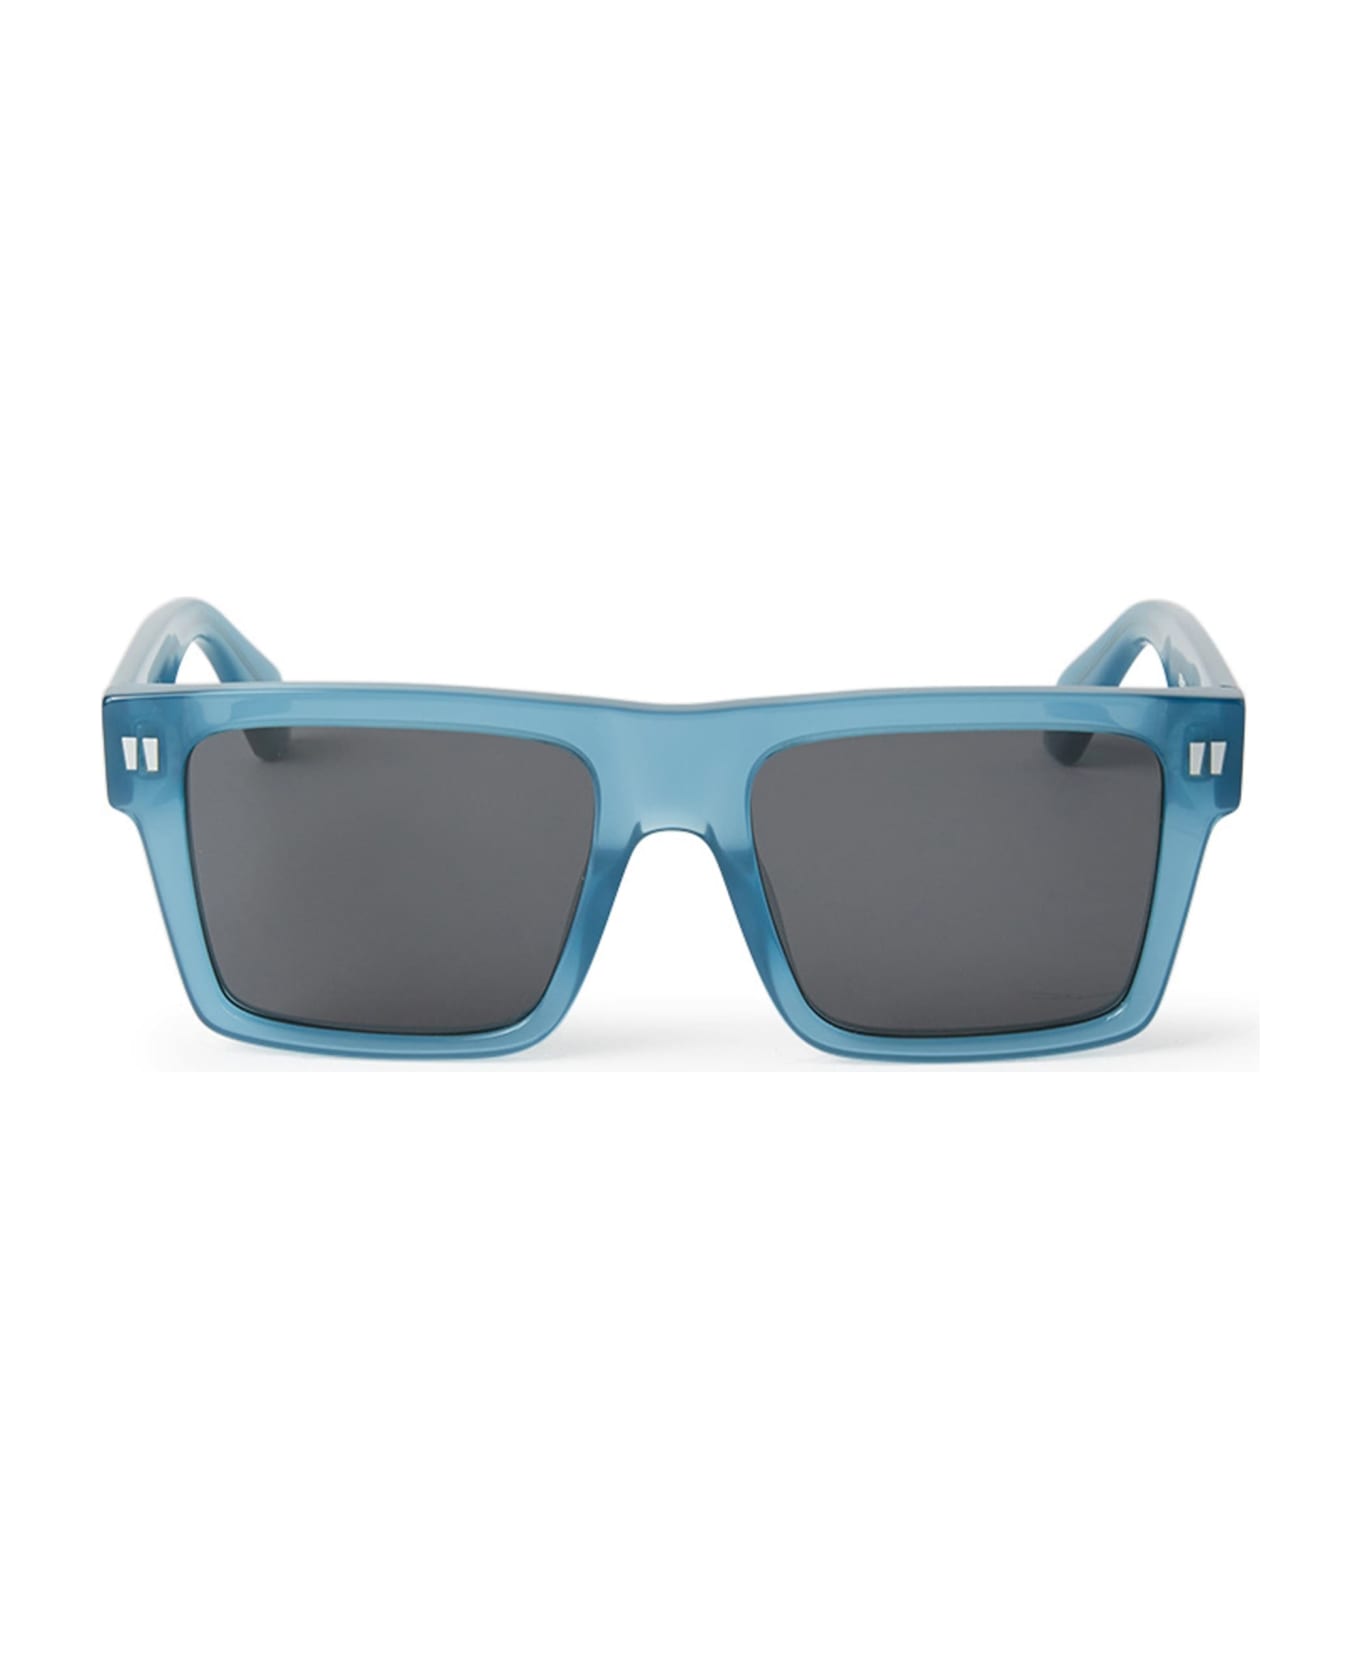 Off-White Lawton Sunglasses - blue